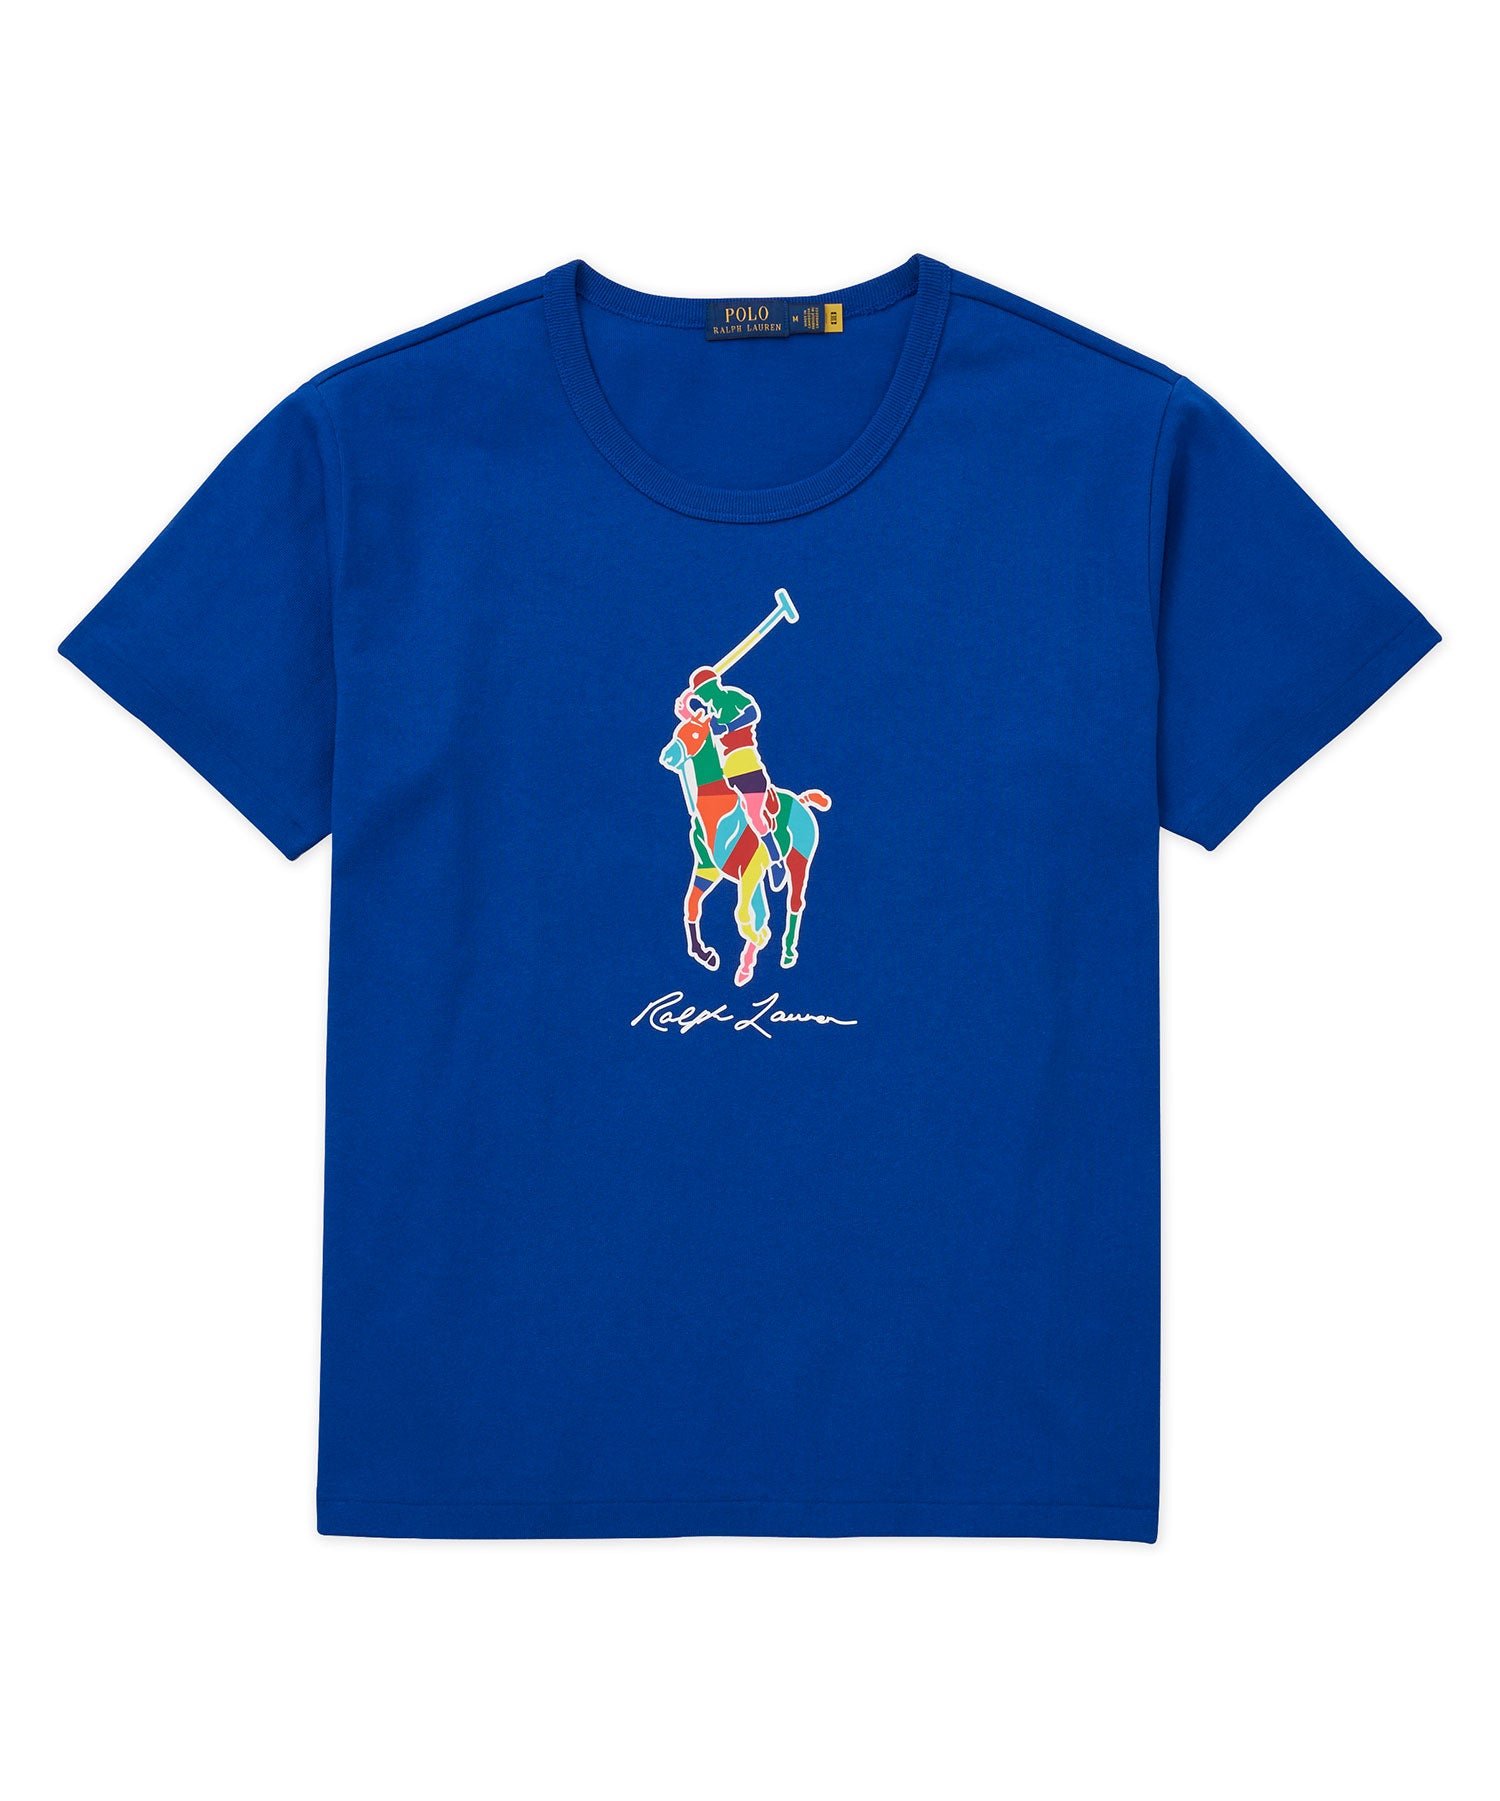 Polo Ralph Lauren Short Sleeve Big Pony Graphic T-Shirt, Men's Big & Tall